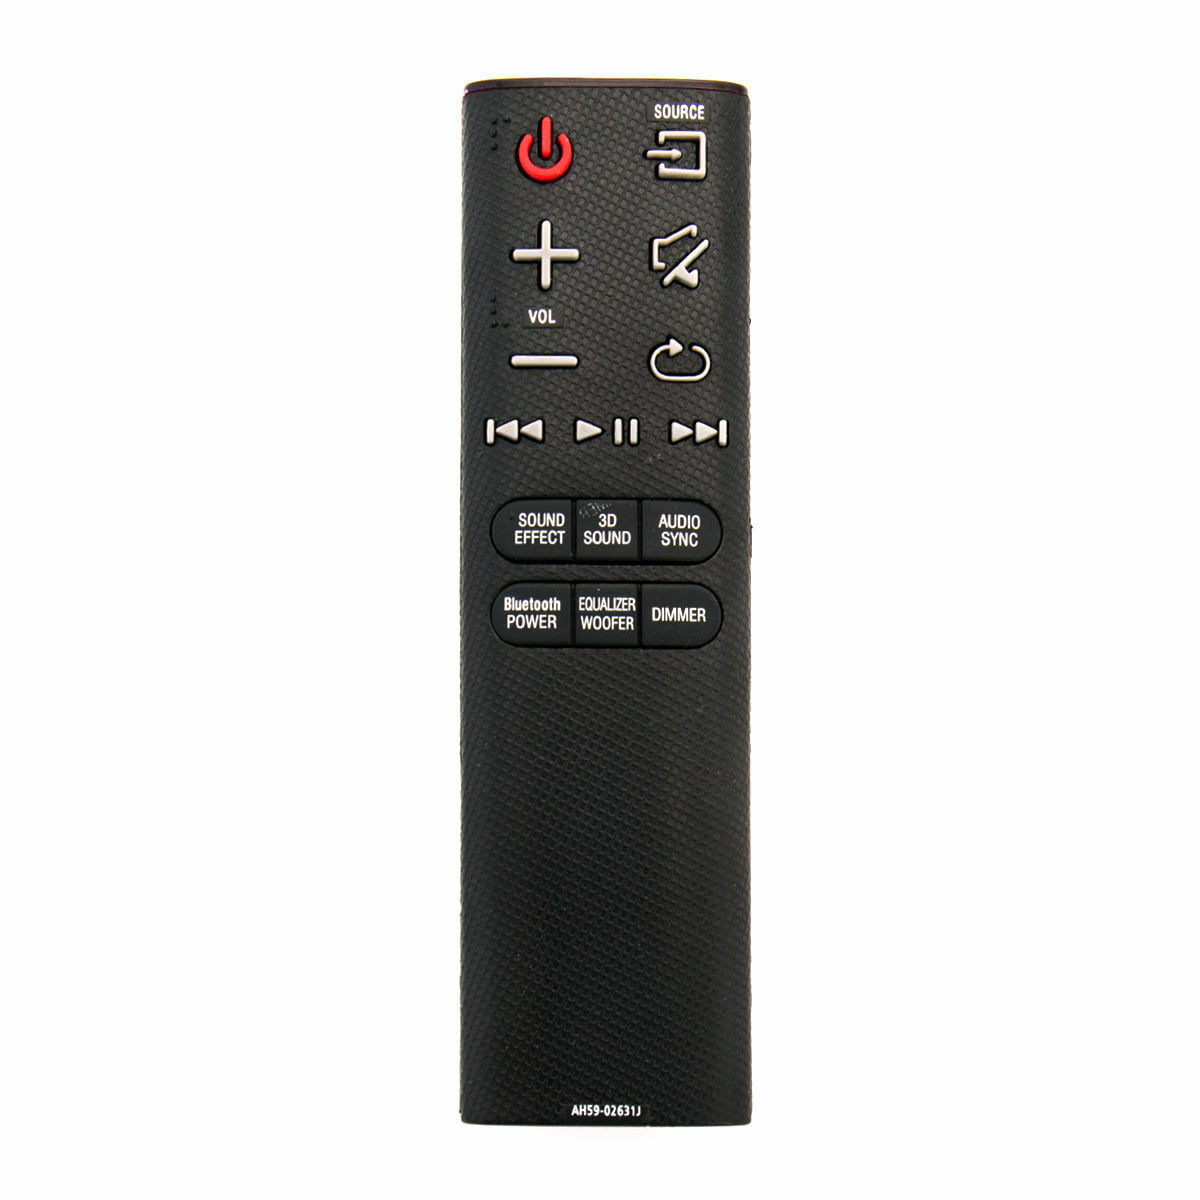 New Brand AH59-02631J Remote Samsung Soundbar HW-H430 HW-H450 - Walmart.com